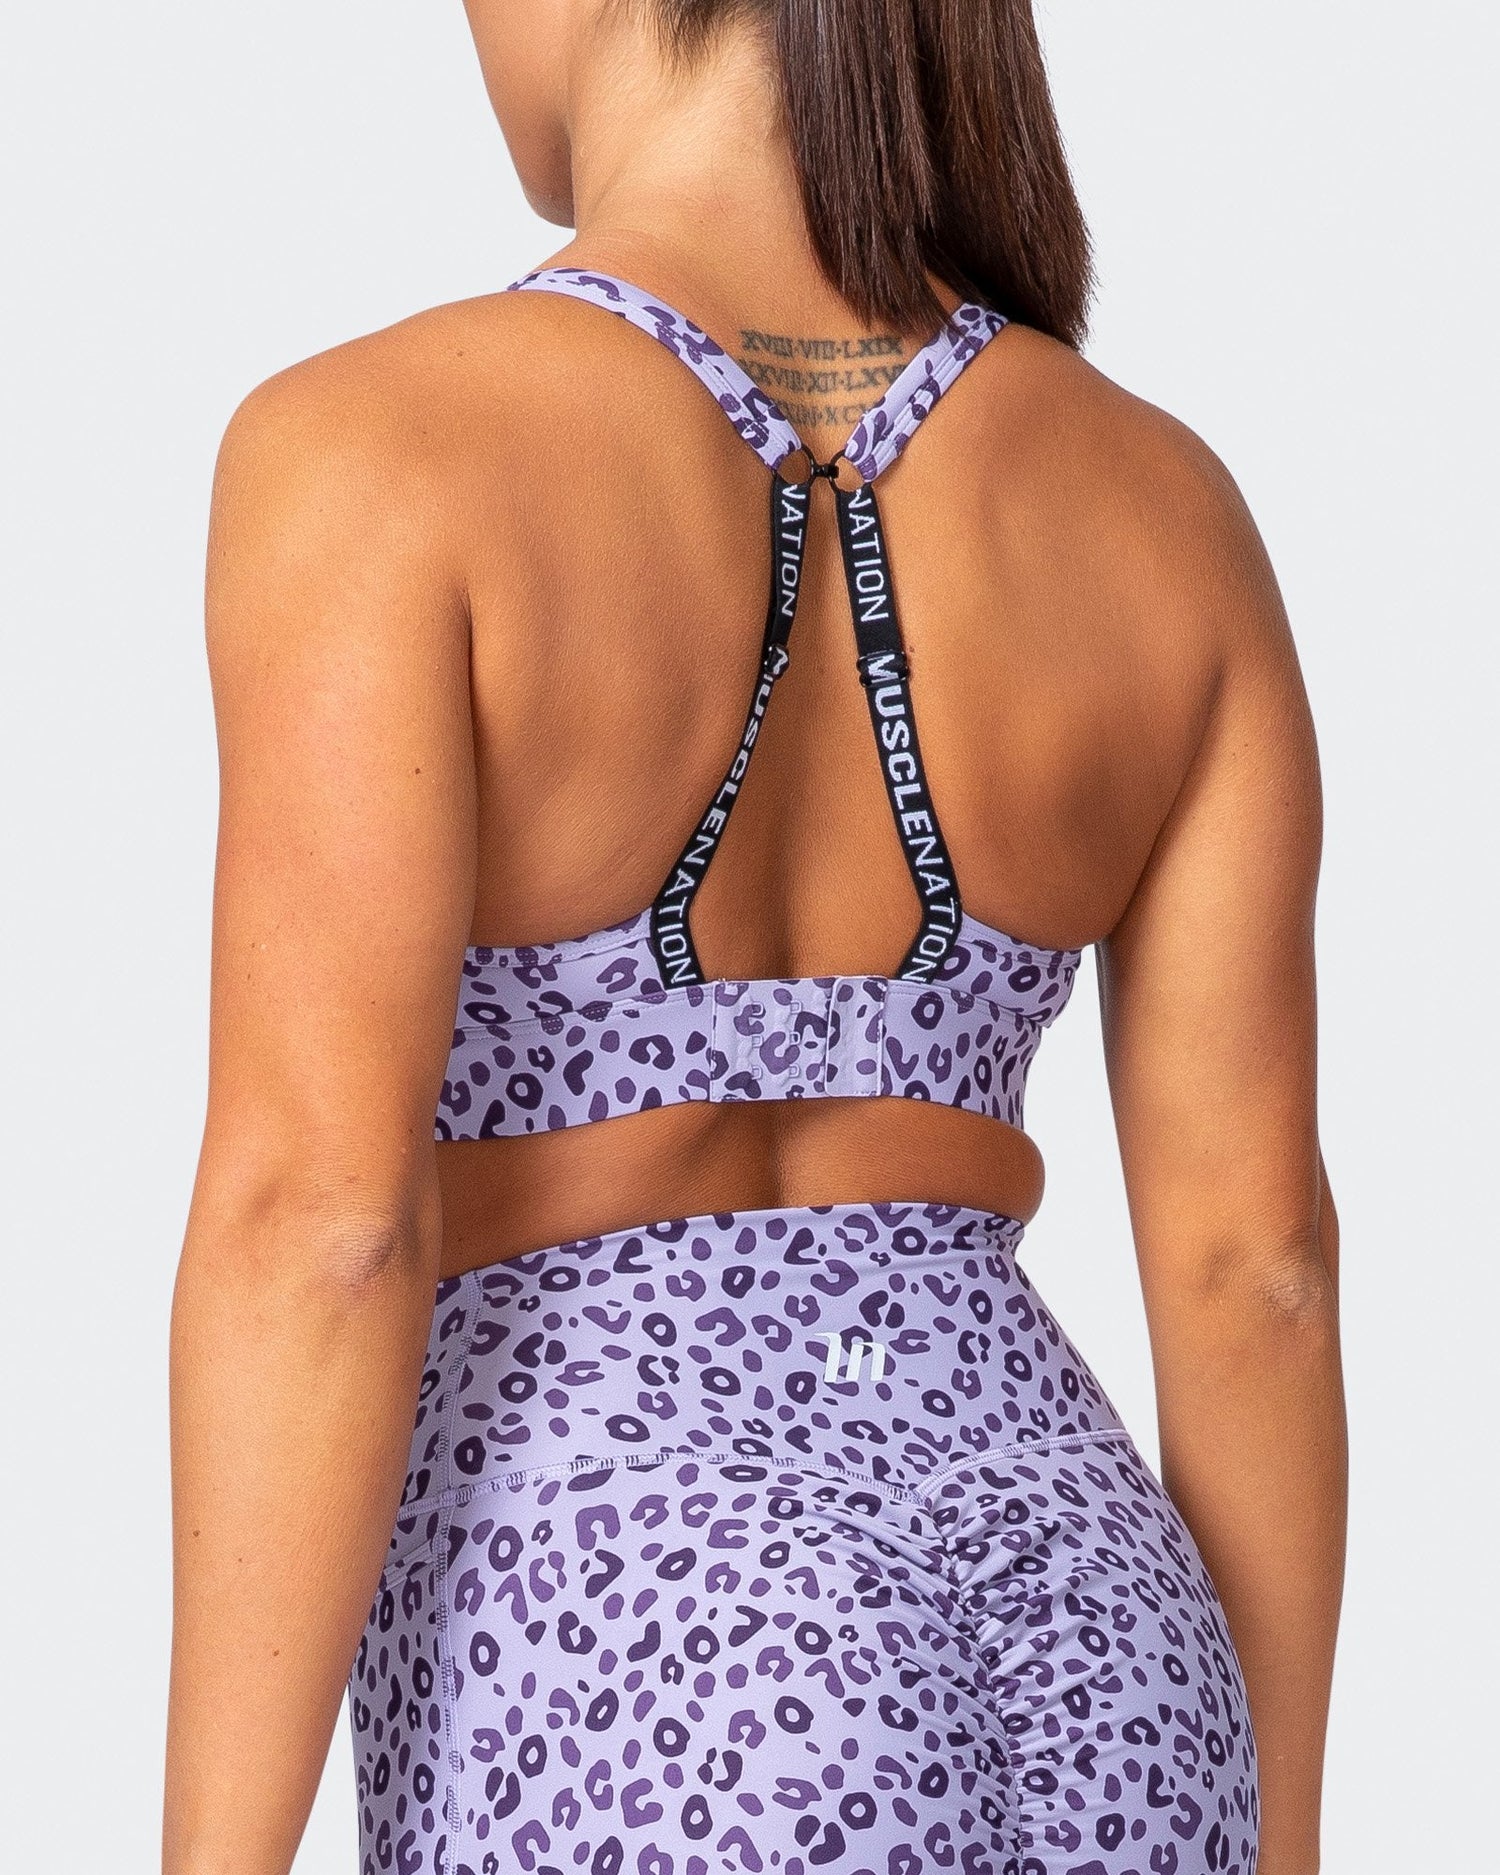 Multicolor leopard animal print lace push up bra size 40C Purple